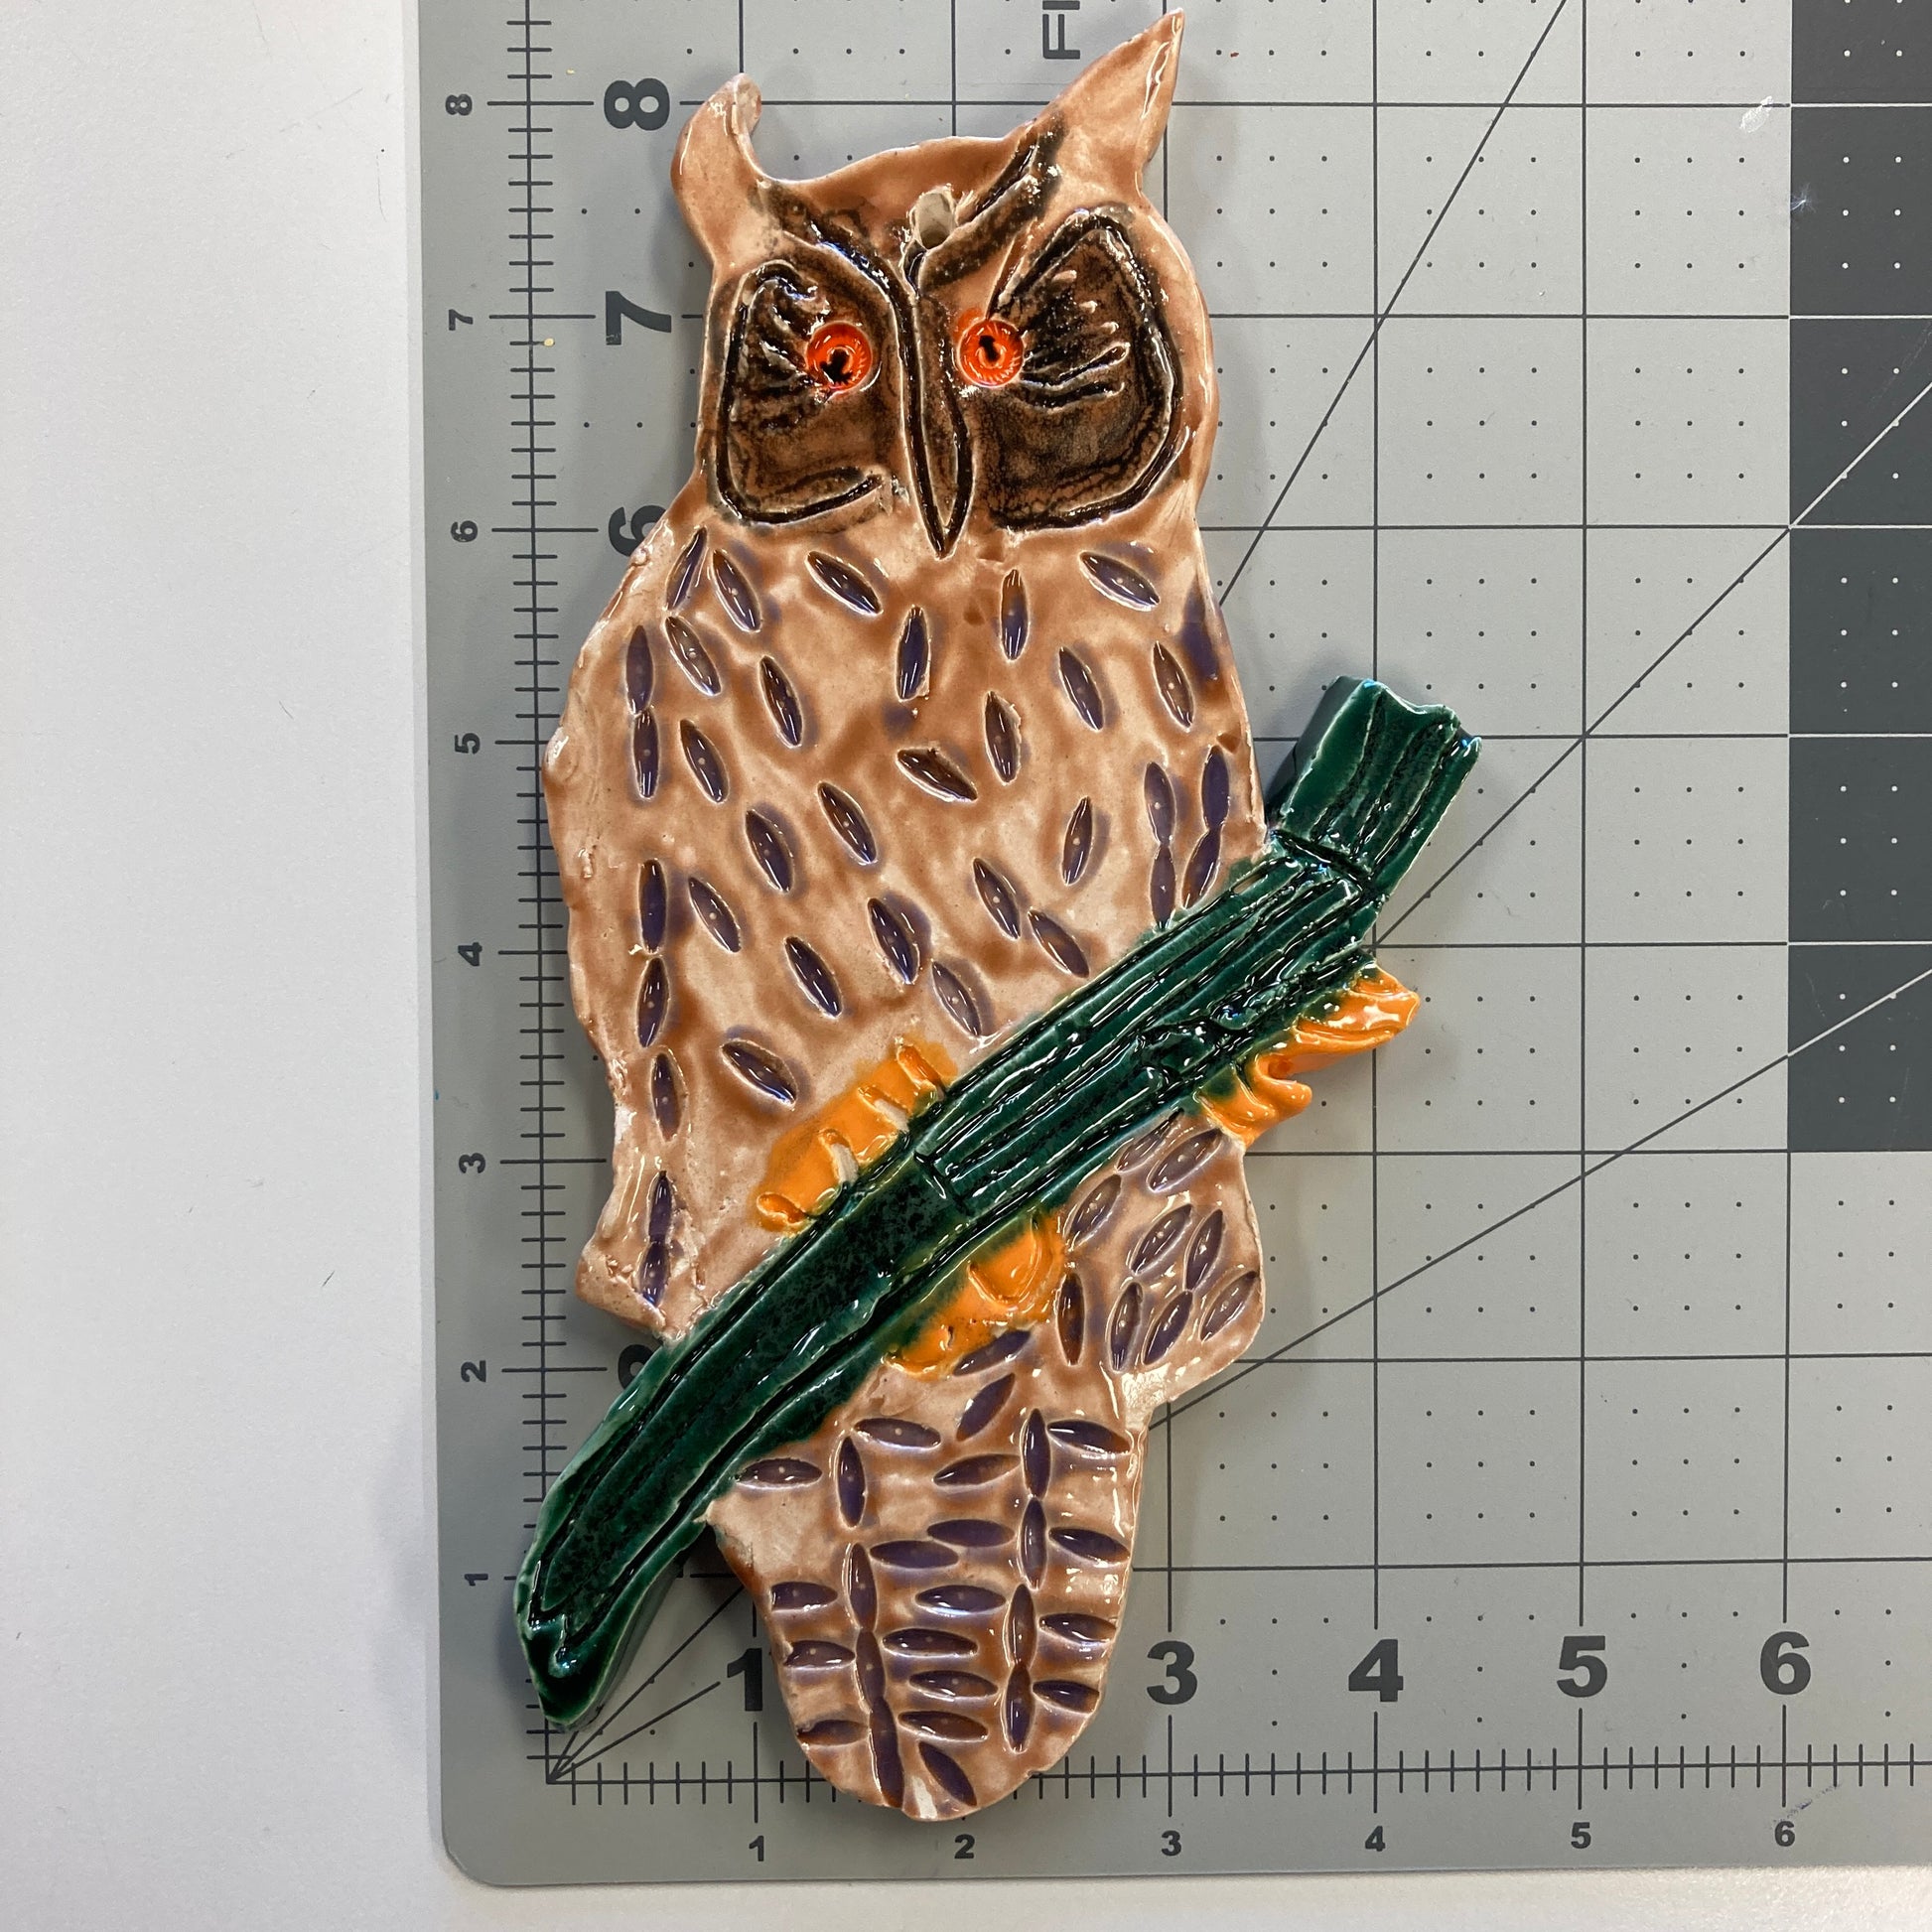 WATCH Resources Art Guild - Ceramic Arts Handmade Clay Crafts 8-inch x 5-inch Glazed Owl made by Morgan Fox